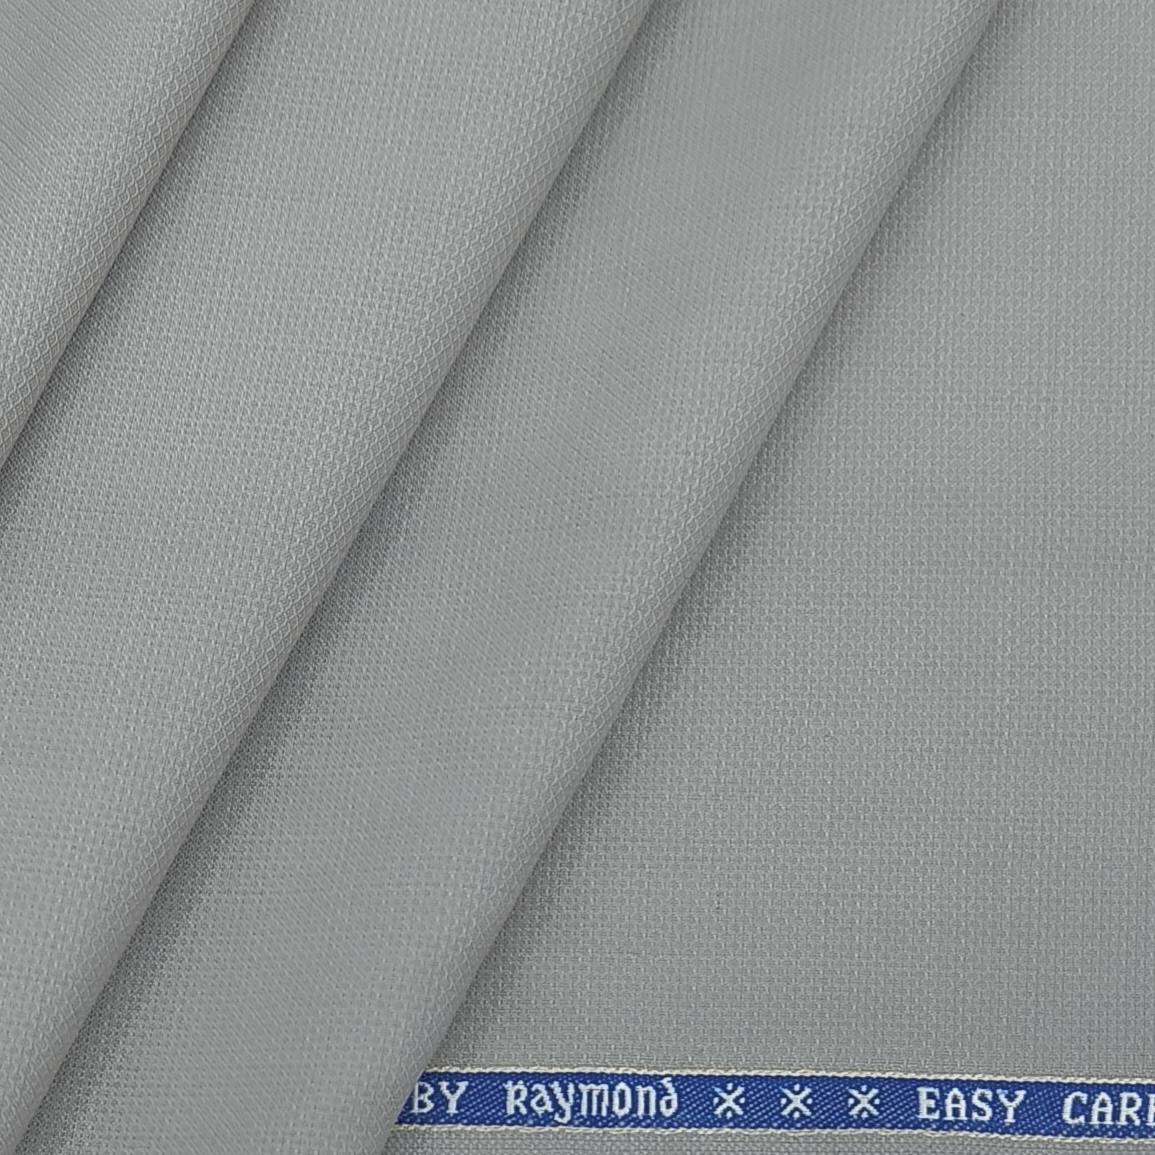 Raymond Premium Dark Blue Colour Plain Trouser Fabric at Rs 1210 | Trouser  Cloth, Pants Fabric, ट्रॉउज़र फैब्रिक - Kabra Vastra Bhandar, Kishangarh |  ID: 26248952991